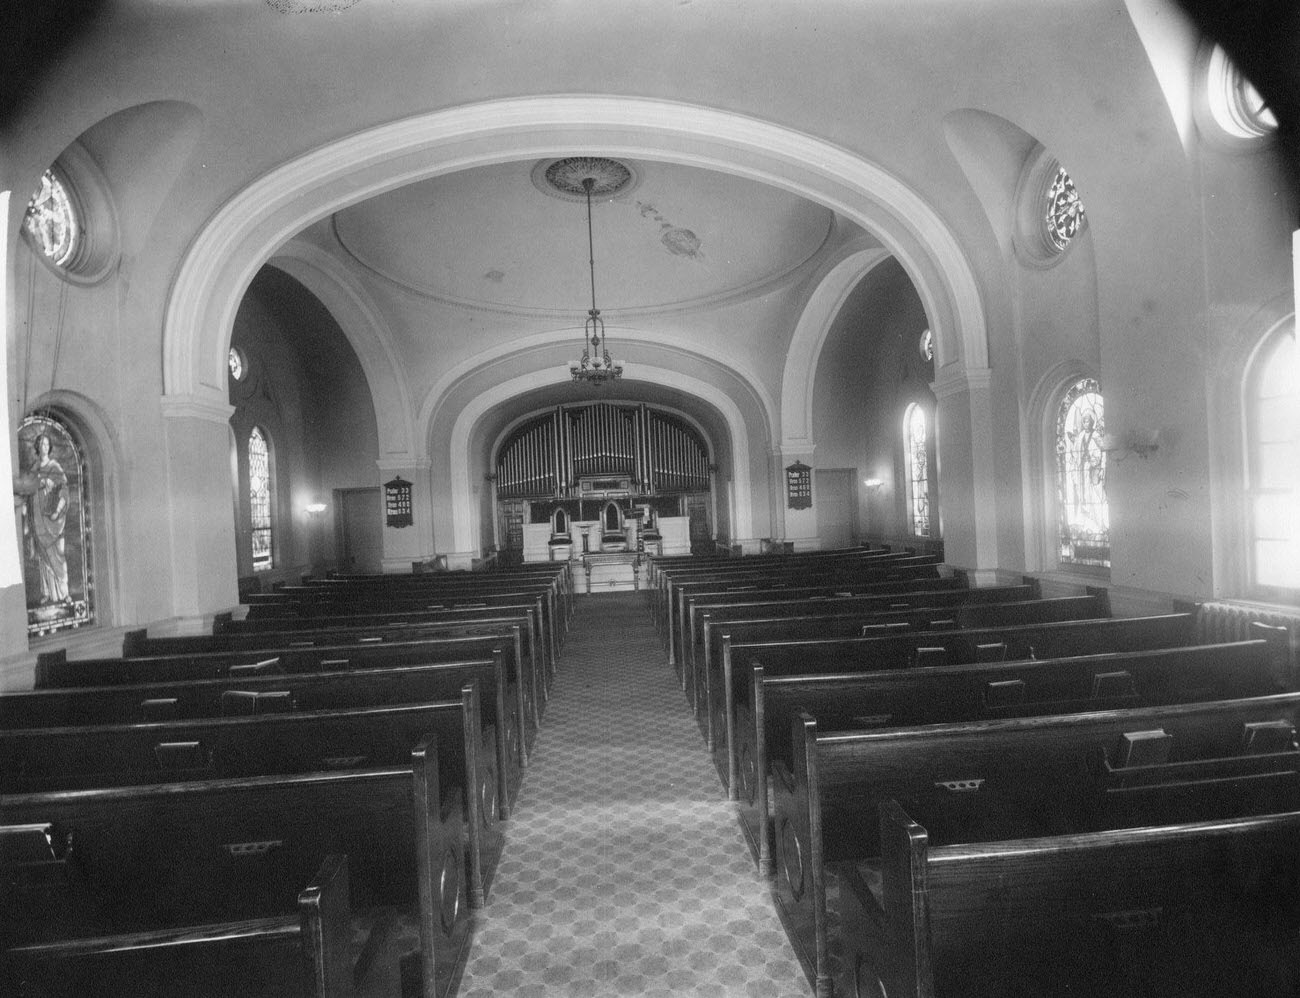 Interior Of Unidentified Church, Possibly At Flatbush Avenue And Church Avenue, Brooklyn, 1895